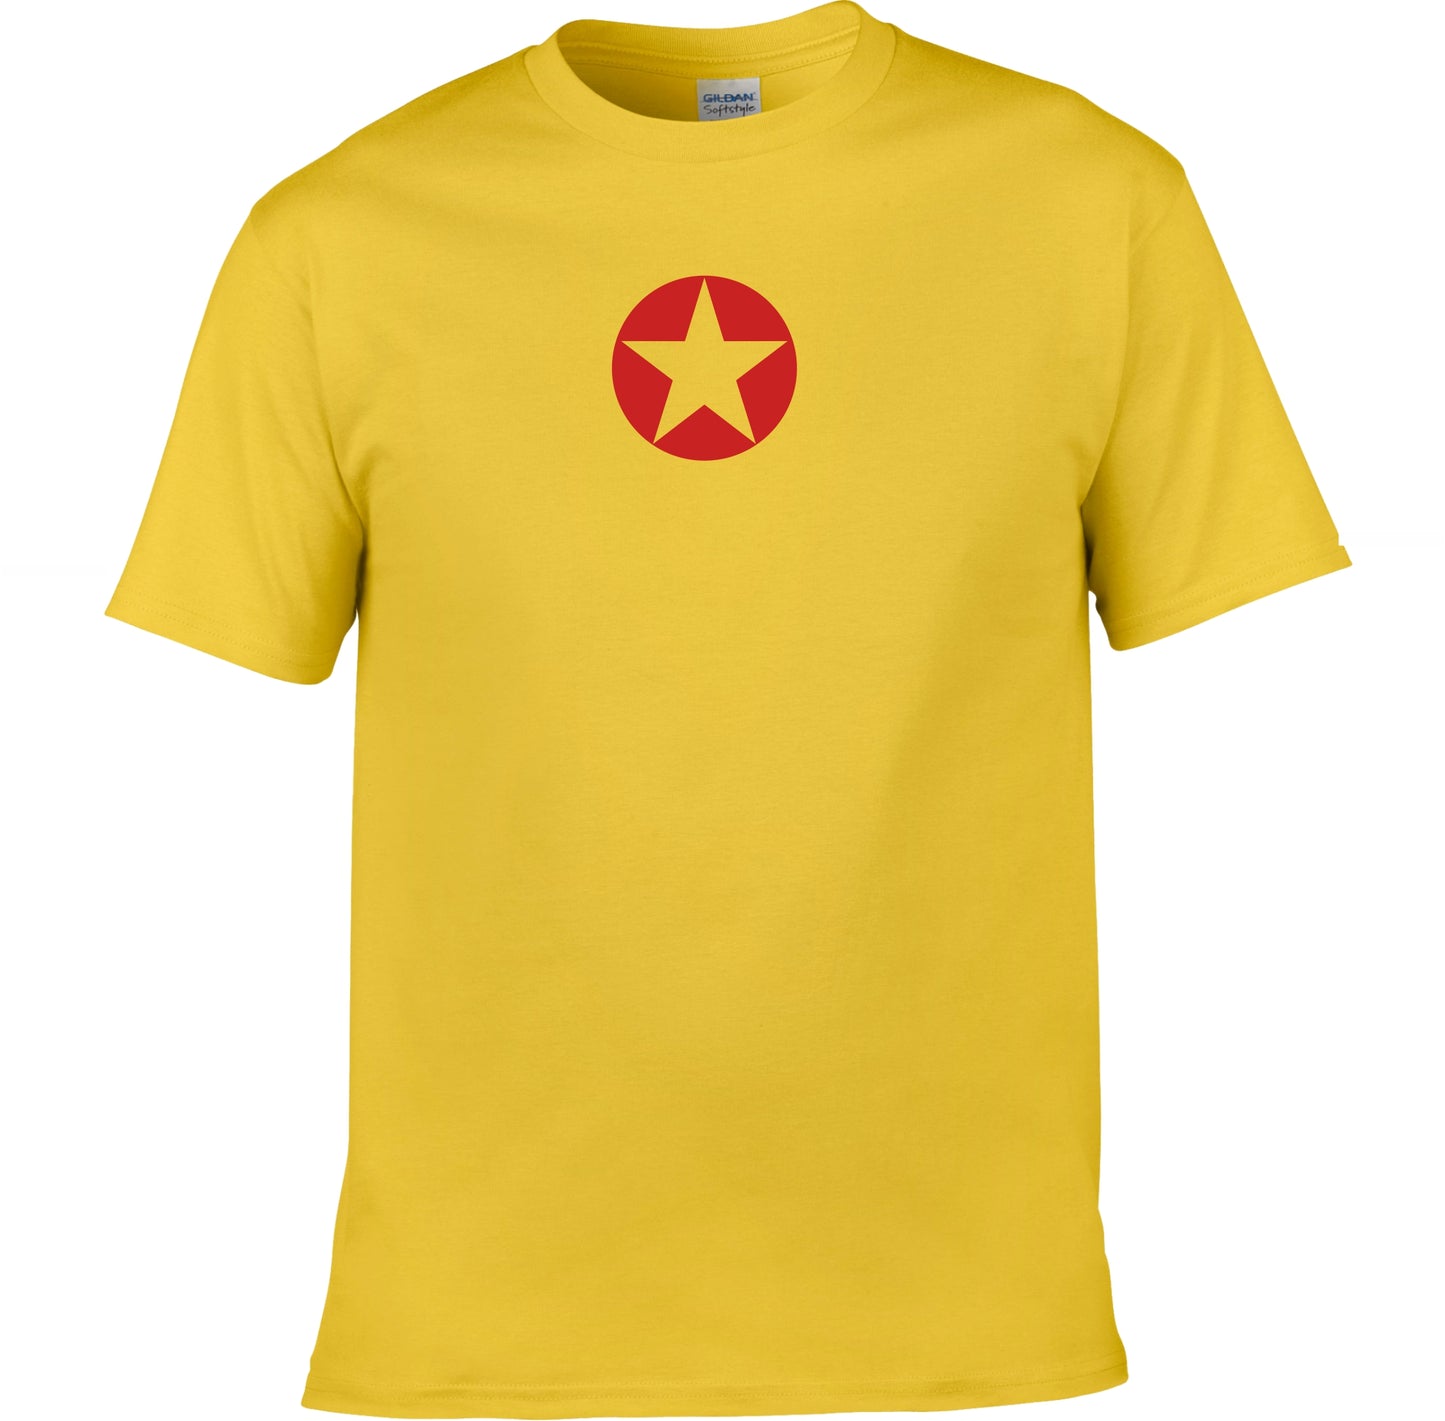 Star T-Shirt - Retro Punk Rock, Protest, Circle Logo, Various Colours